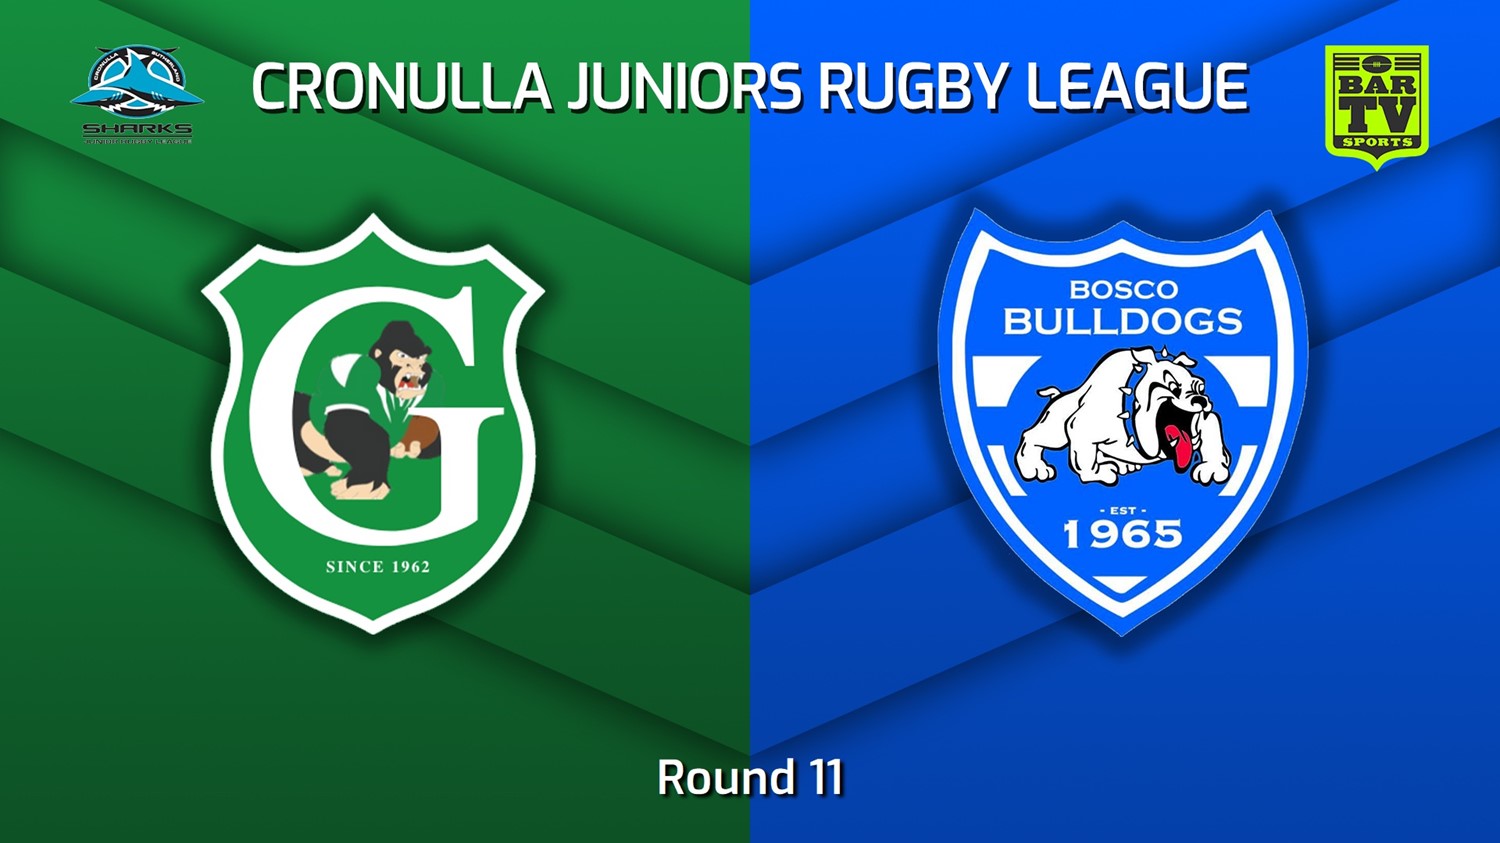 220716-Cronulla Juniors - U6 Gold Round 11 - Gymea Gorillas v St John Bosco Bulldogs Minigame Slate Image